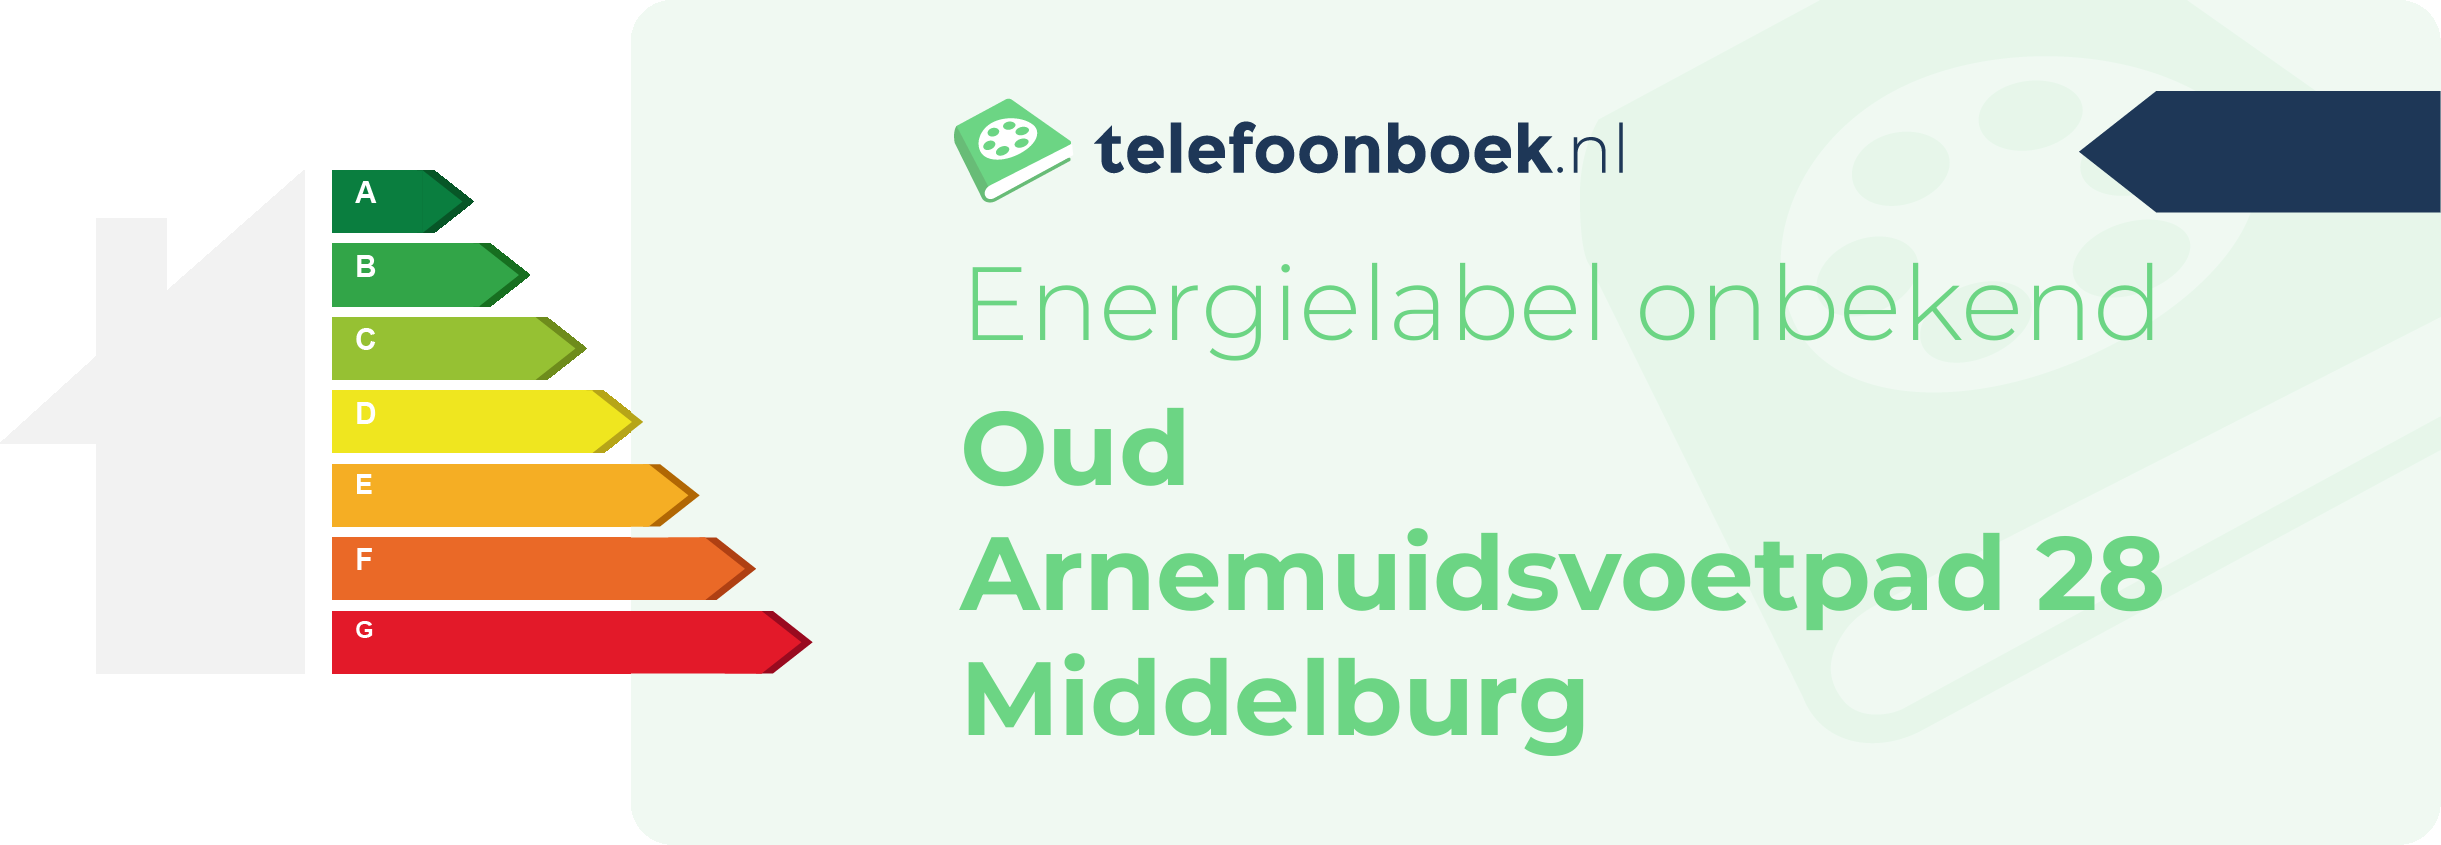 Energielabel Oud Arnemuidsvoetpad 28 Middelburg